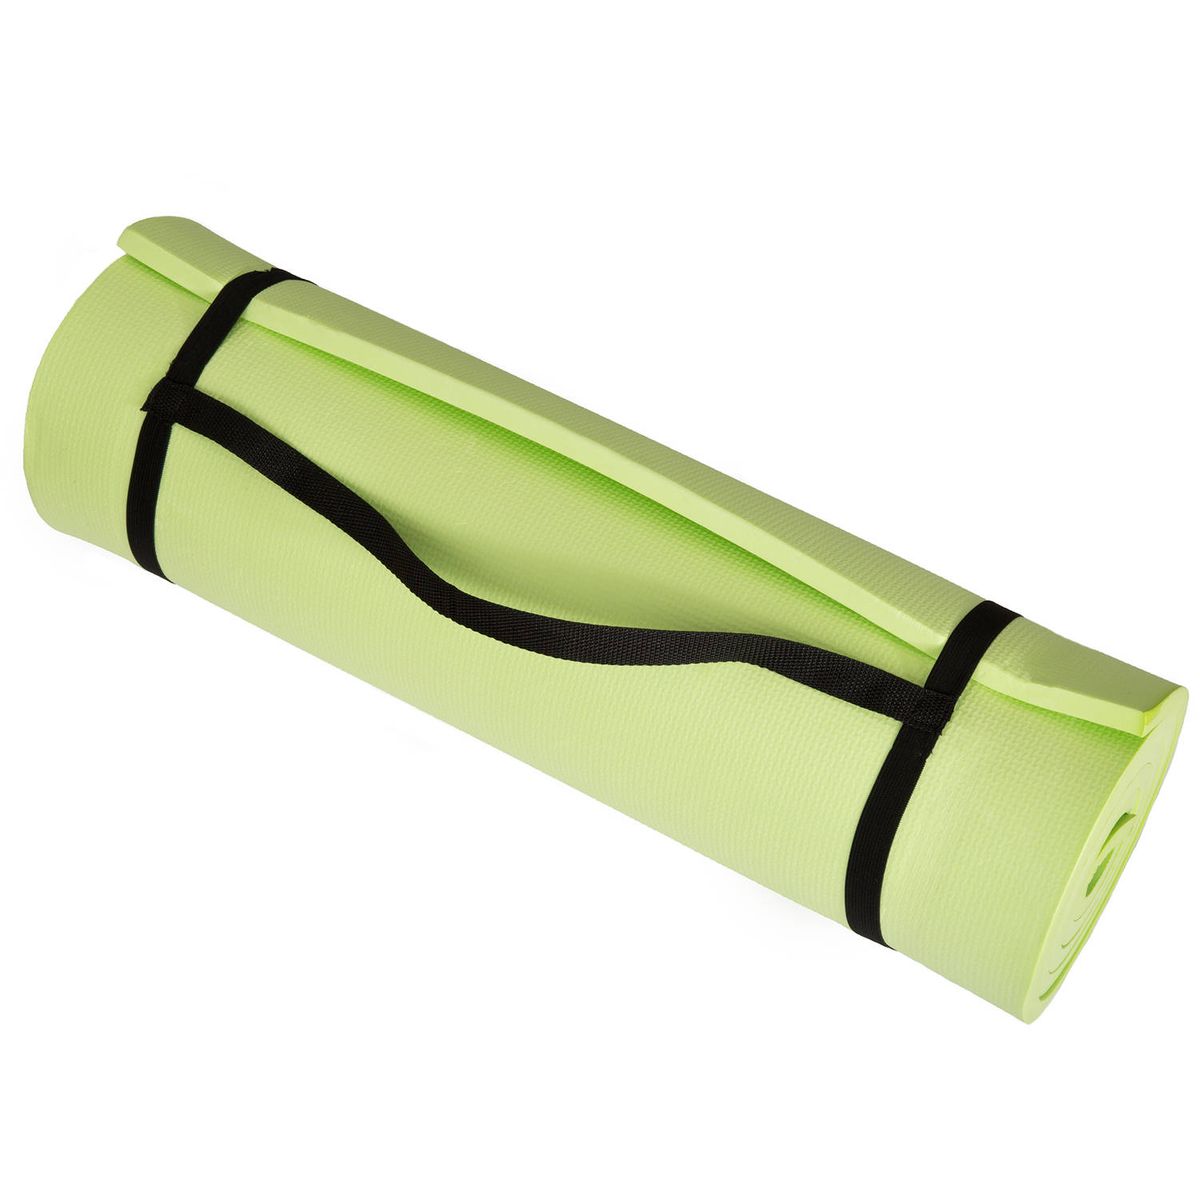 [RDY] [送料無料] Wakeman フィットネス1/2 "極厚ヨガマット 携帯ストラップ付き グリーン [楽天海外通販] | Wakeman Fitness 1/2" Extra Thick Yoga Mat, With Carrying Strap, Green